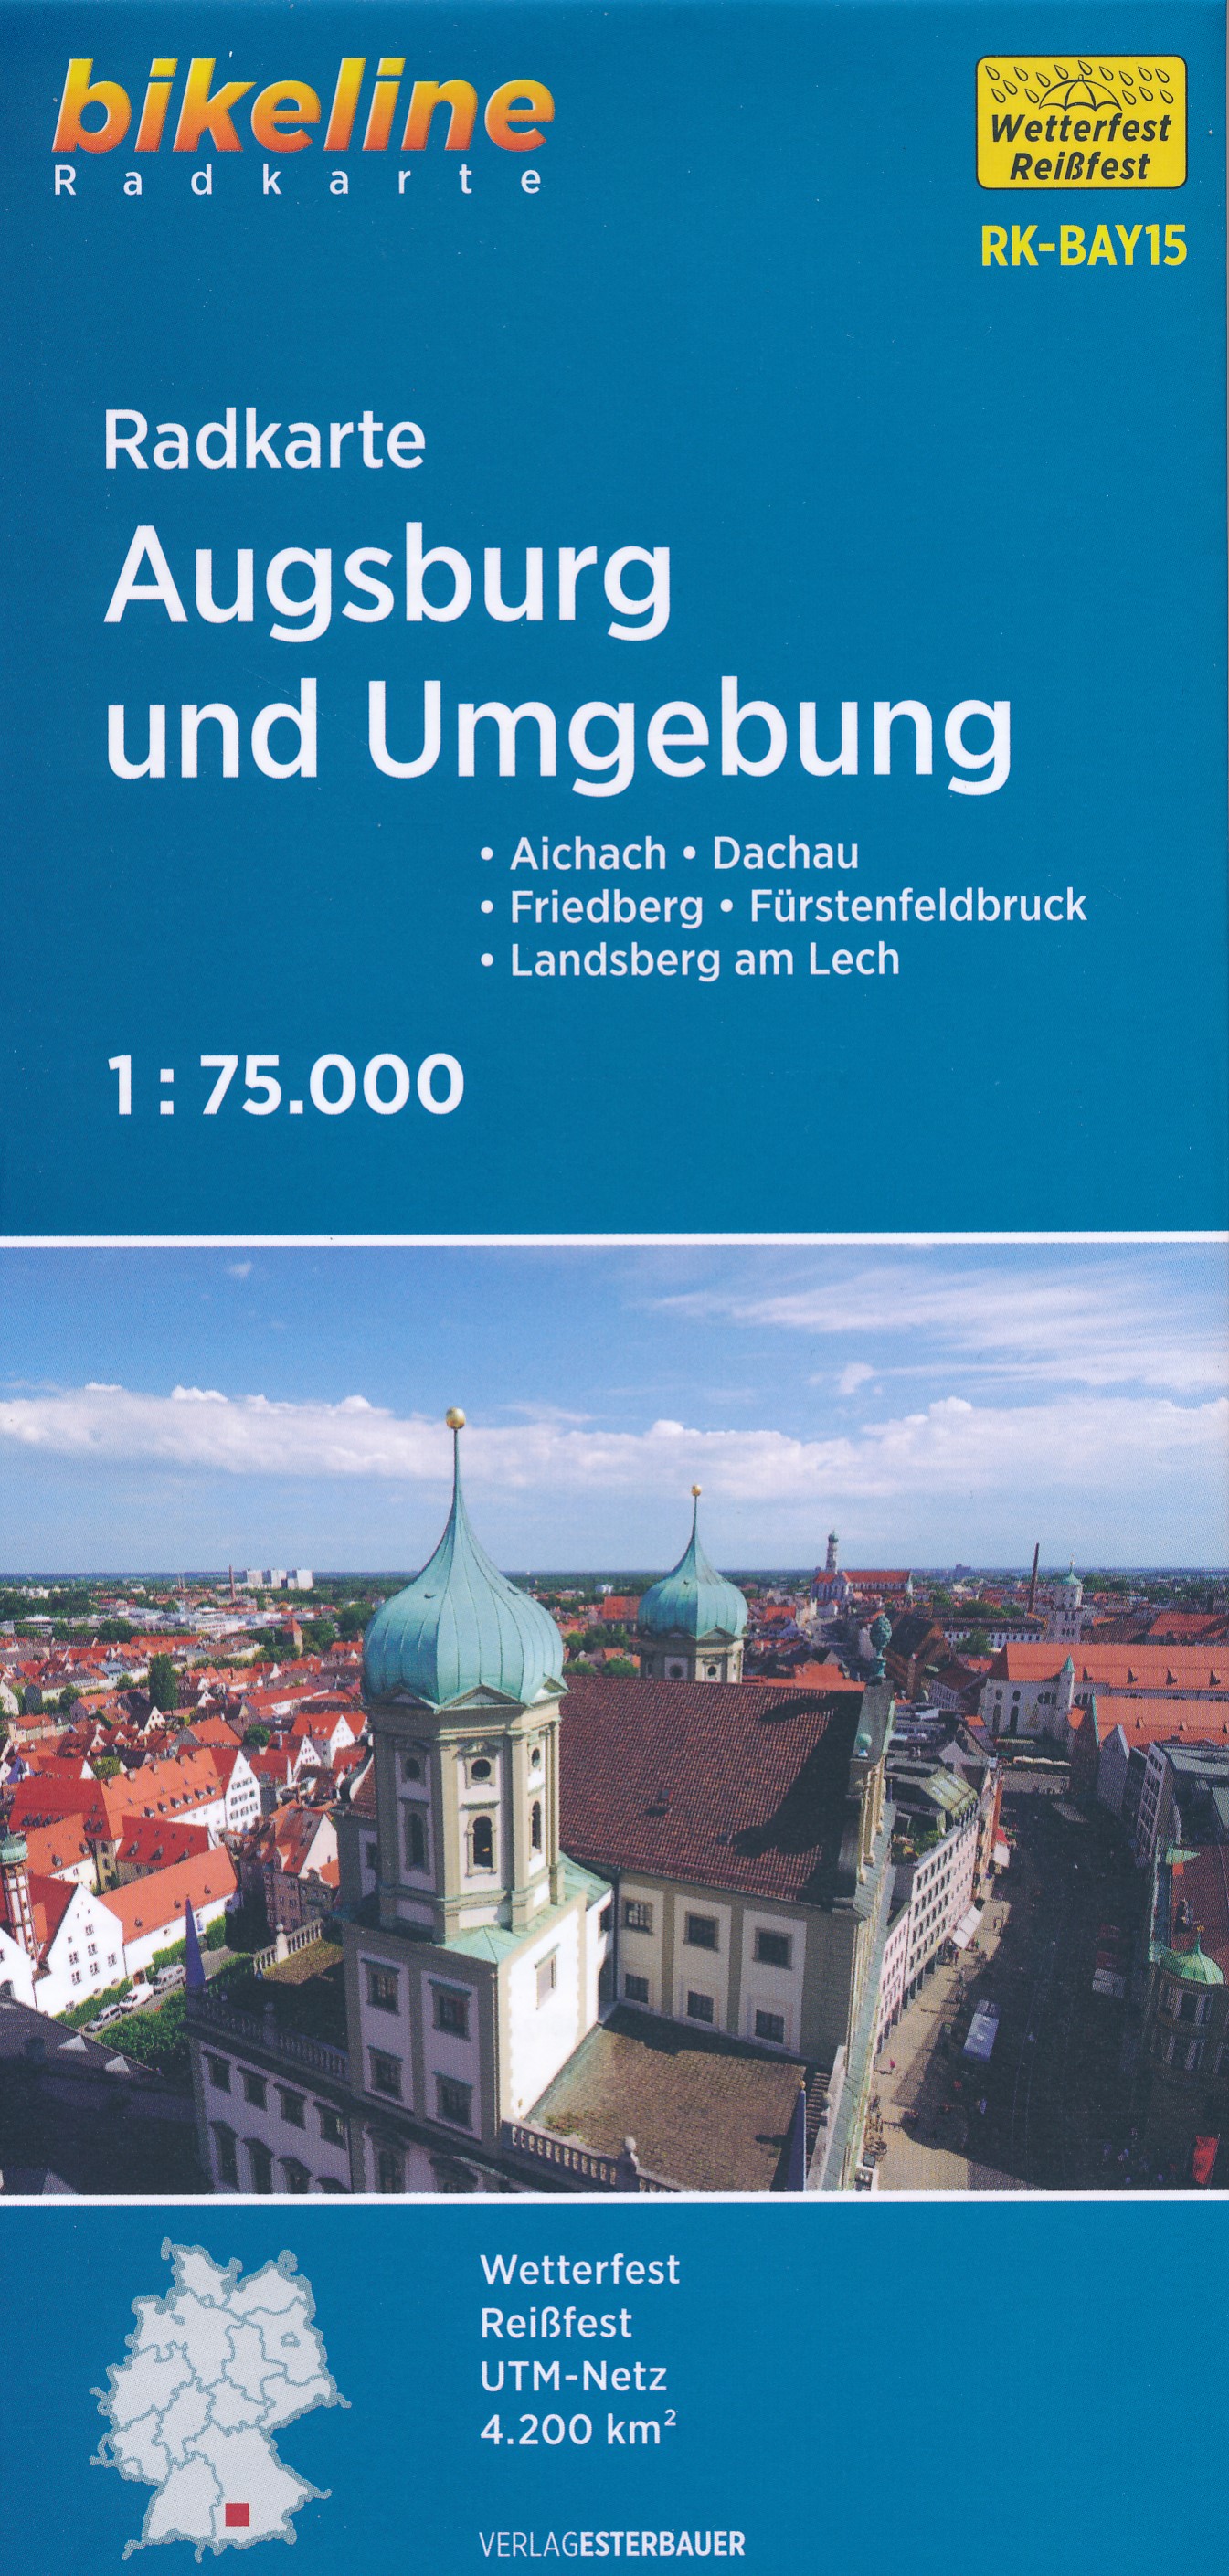 Online bestellen: Fietskaart BAY15 Bikeline Radkarte Augsburg und Umgebung | Esterbauer